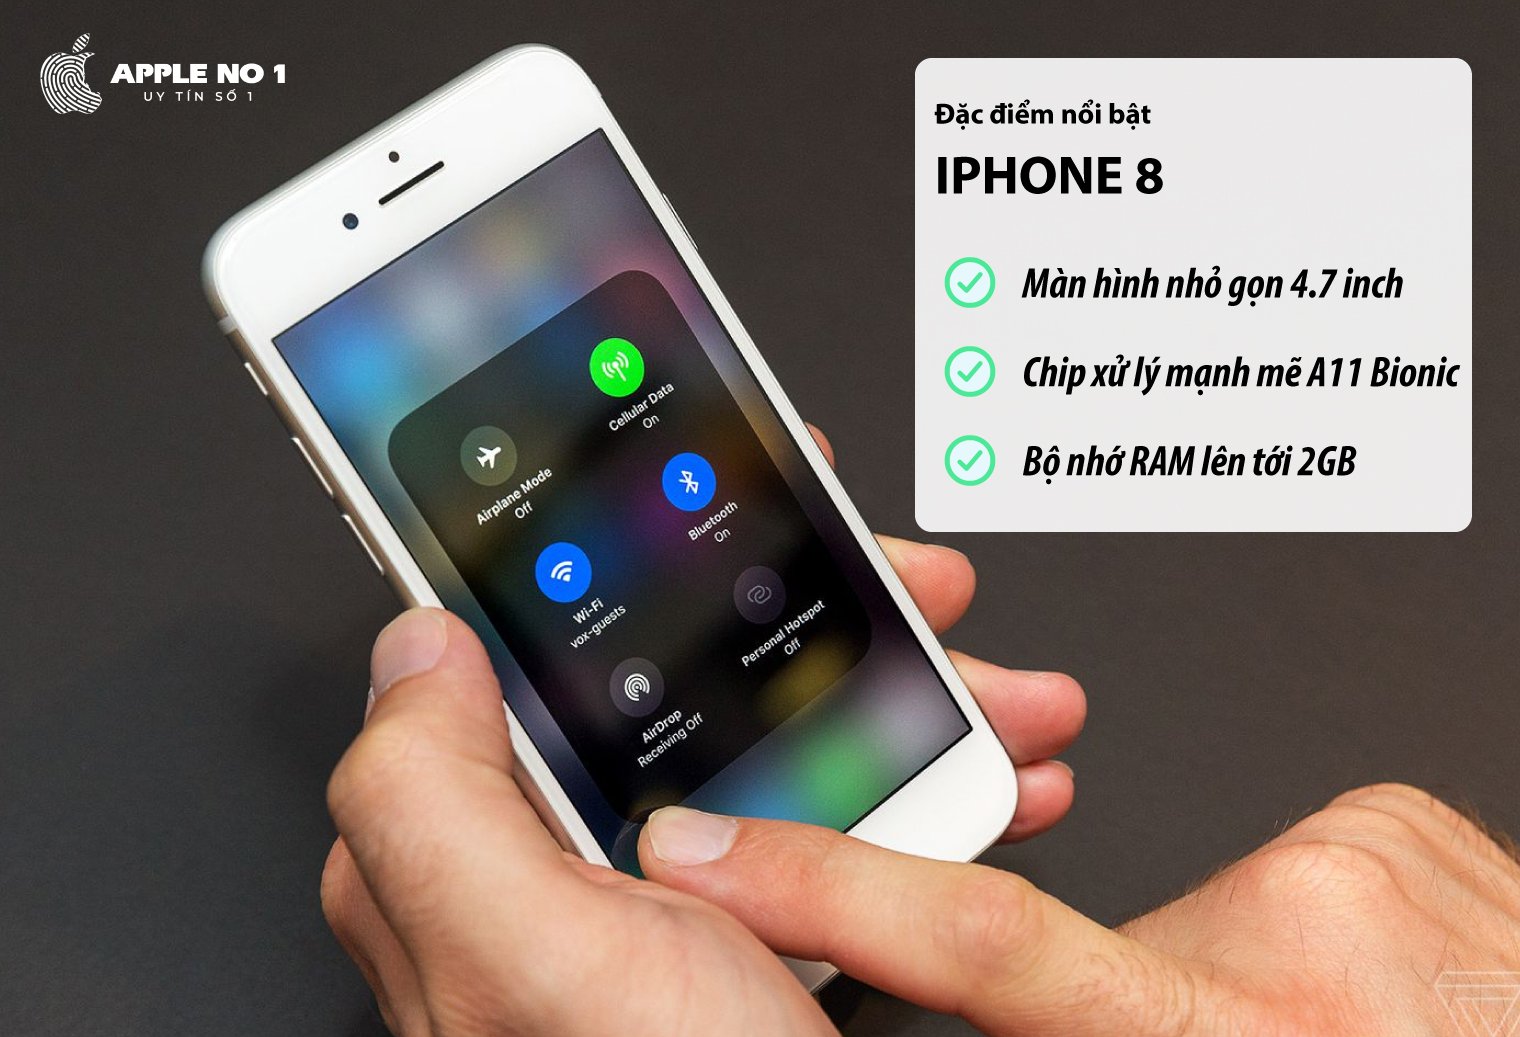 dien thoai iphone 8 voi man hinh retina HD 4.7 inch va chip xu ly apple a11 bionic